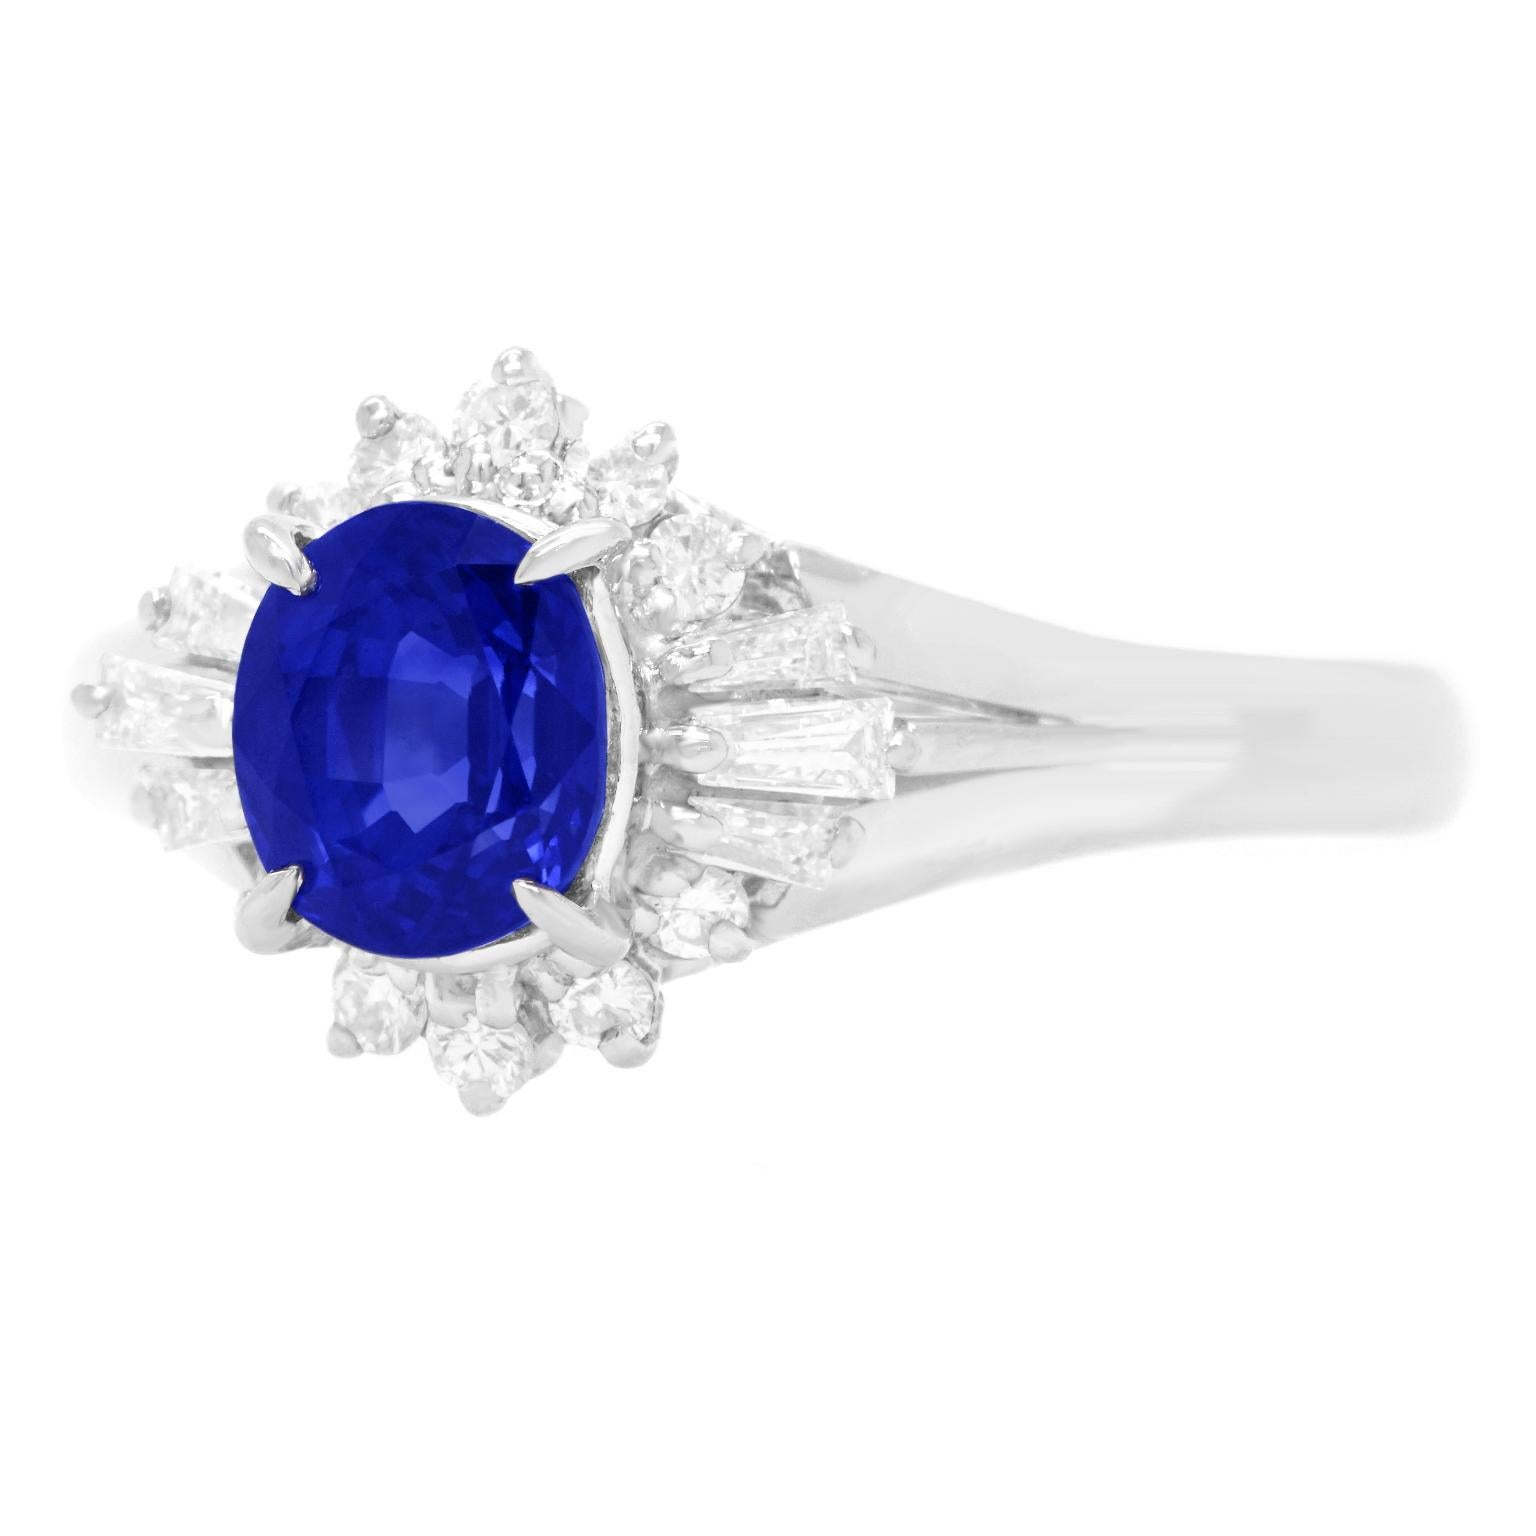 Brilliant Cut 1.10 Carat Sapphire and Diamond Ring